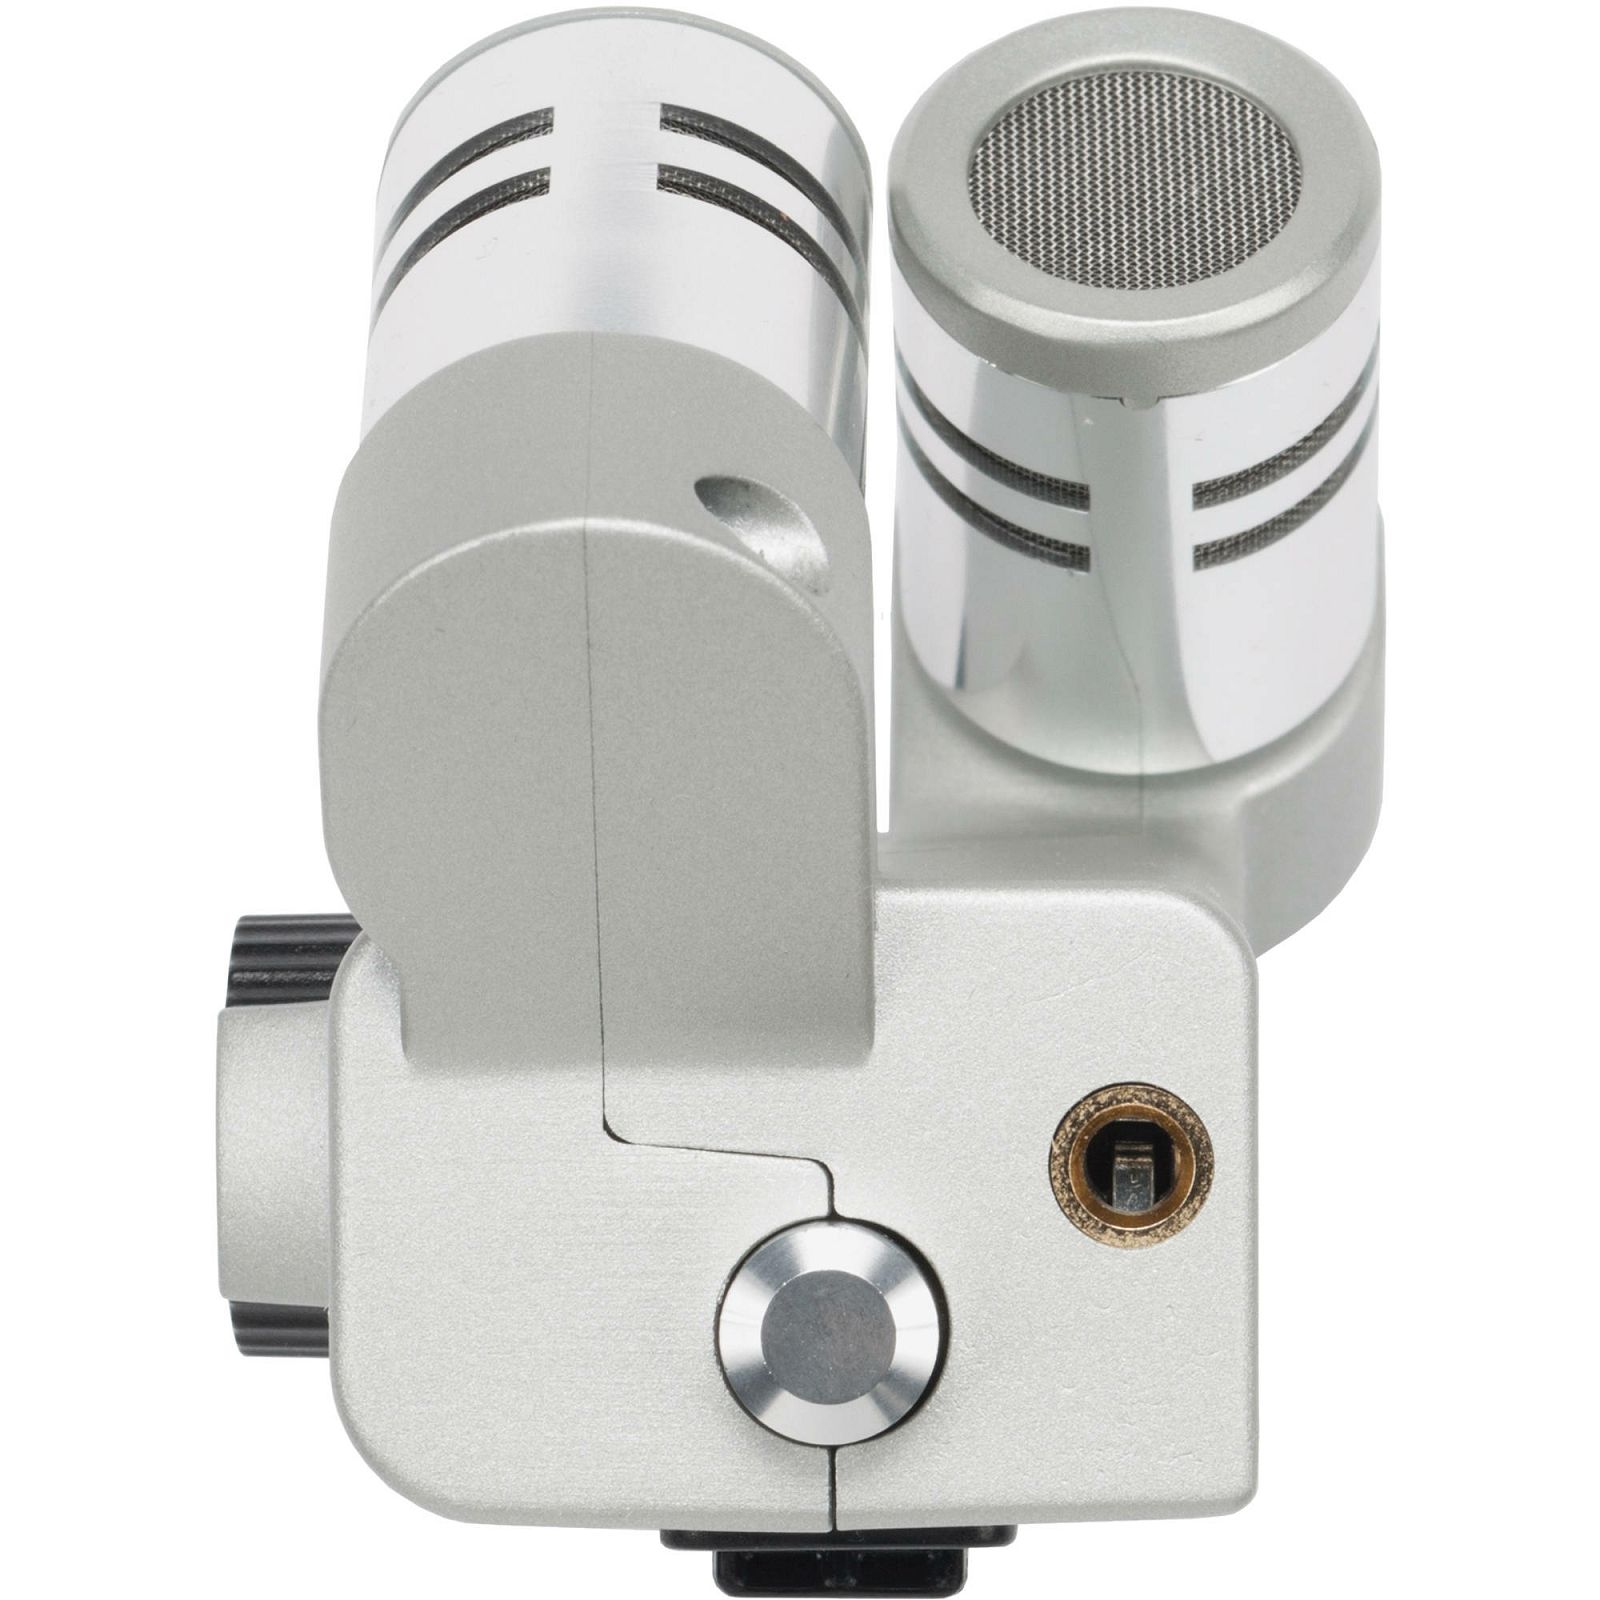 Zoom H6 Handy Recorder with Interchangeable Microphone System prijenosni snimač zvuka